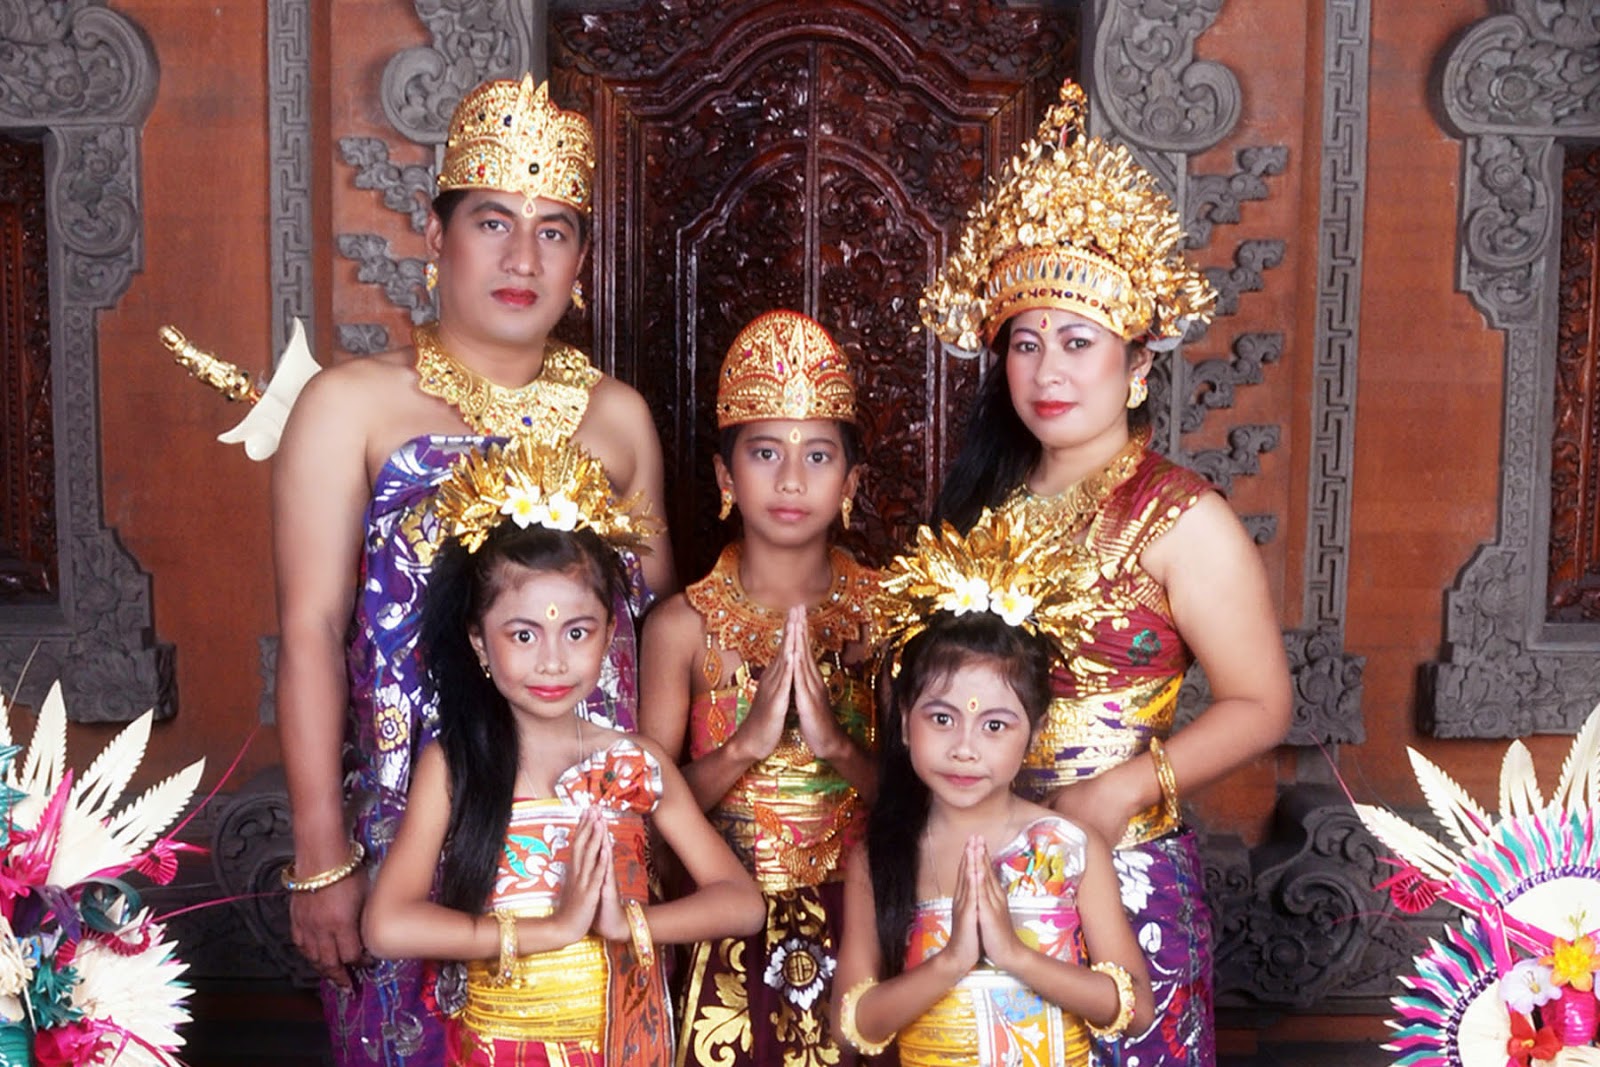  Pakaian budbahasa Bali merupakan salah satu pakaian budbahasa yang unik dan bervariasi Pakaian Adat Bali dan Filosofinya